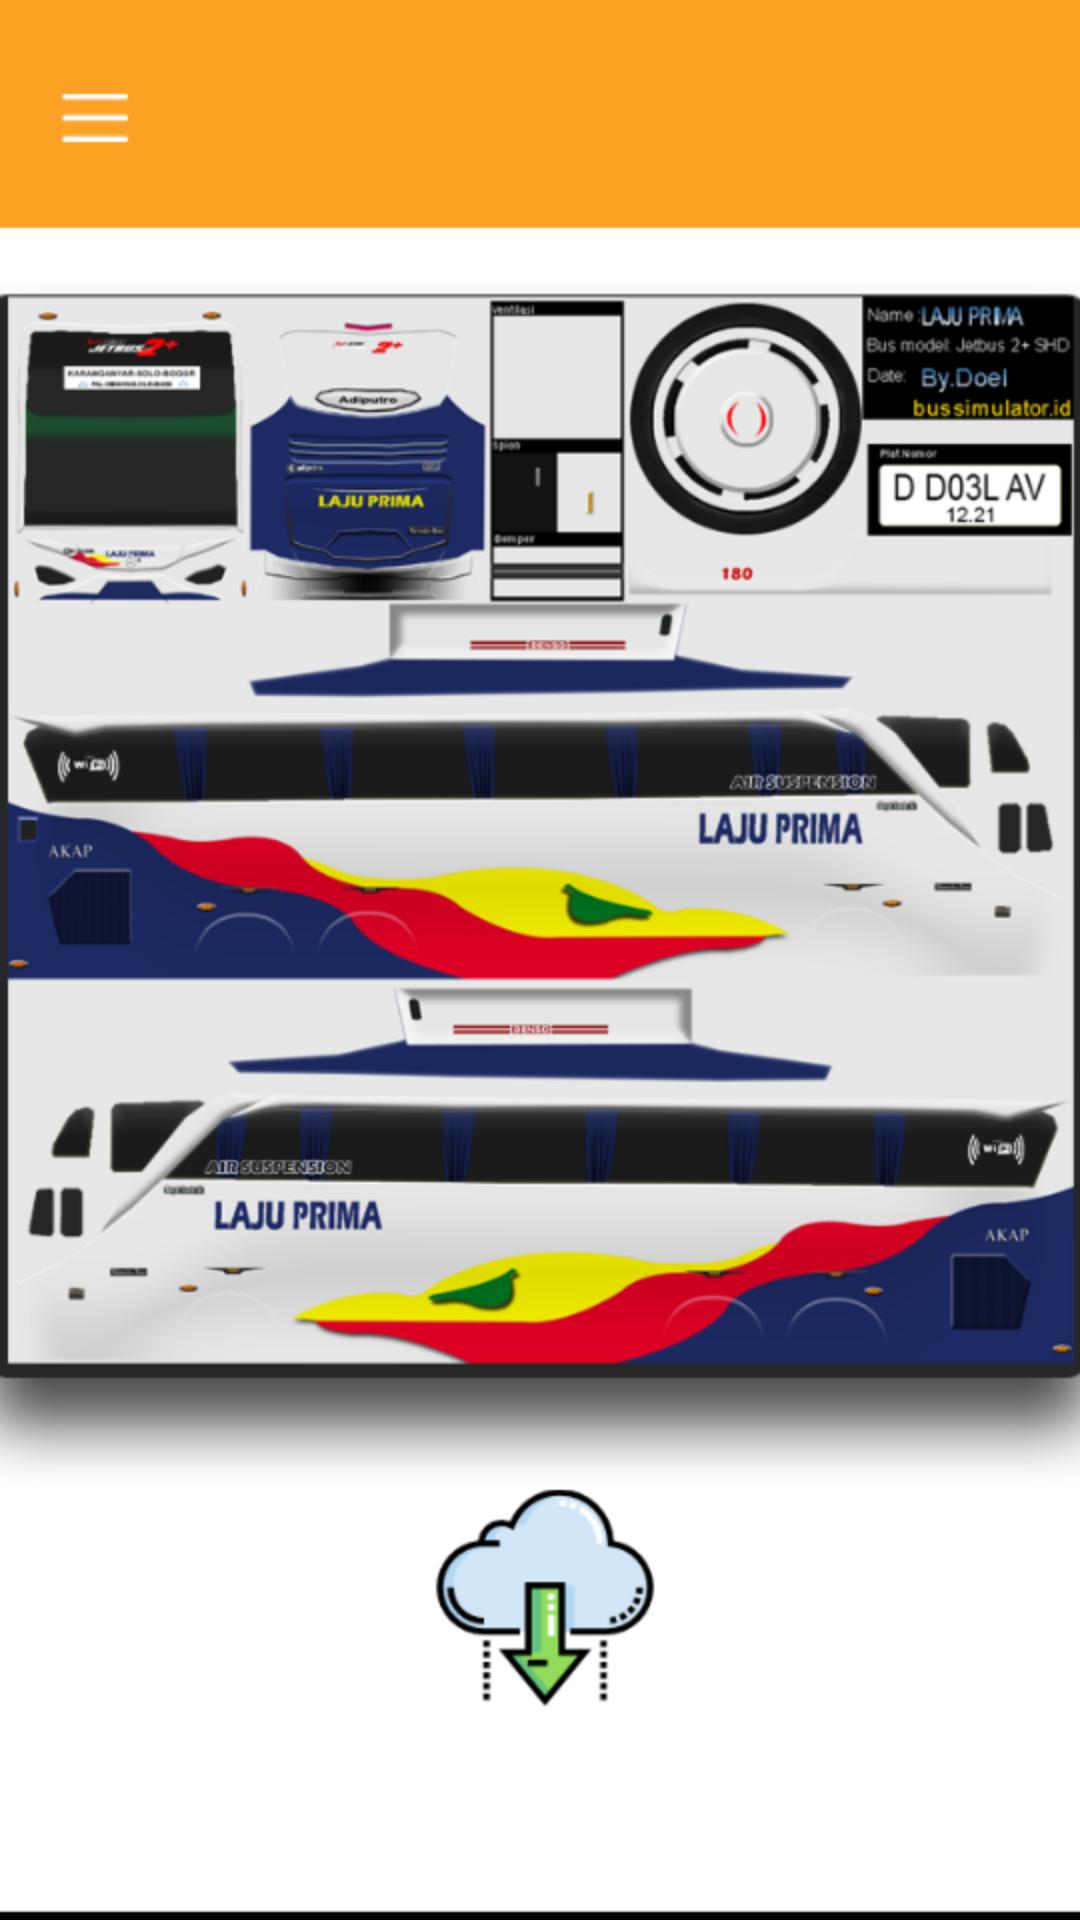 Livery Bus Simulator Shd Laju Prima Arena Modifikasi